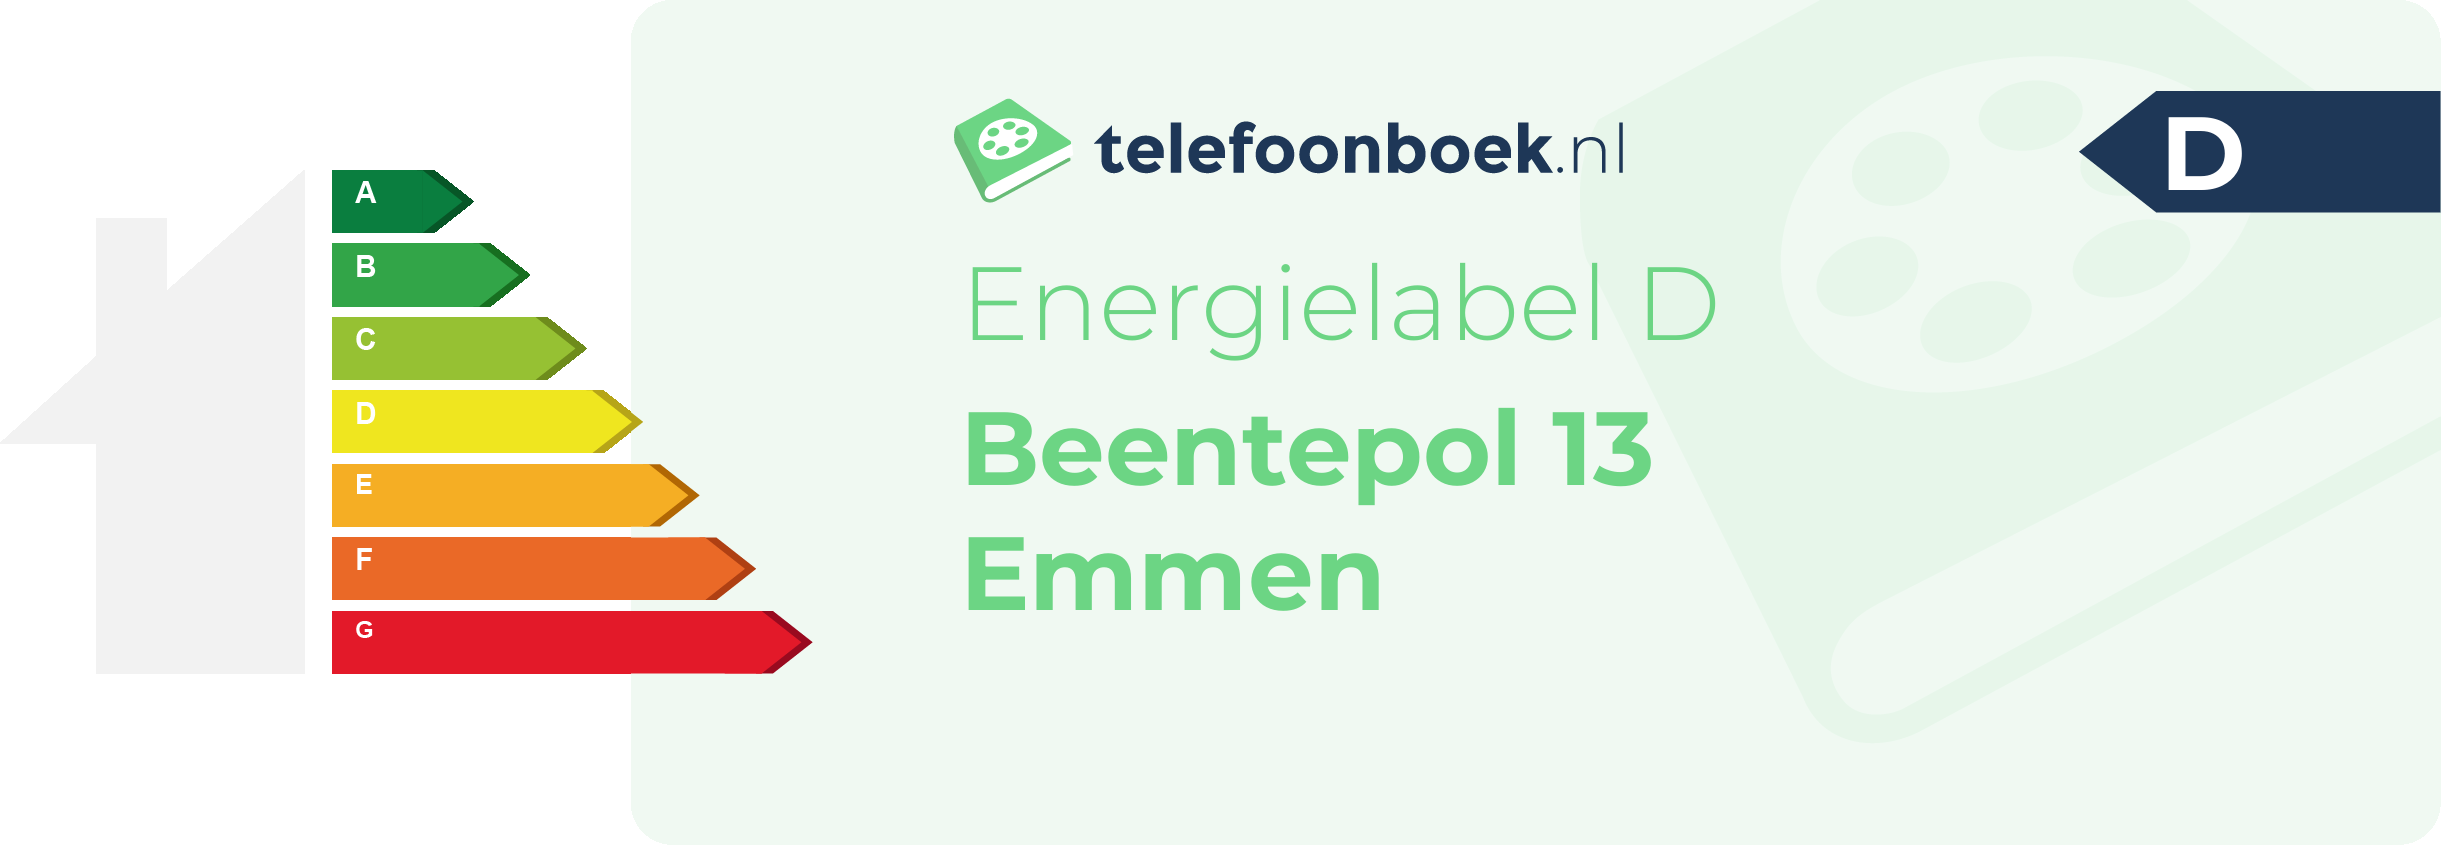 Energielabel Beentepol 13 Emmen